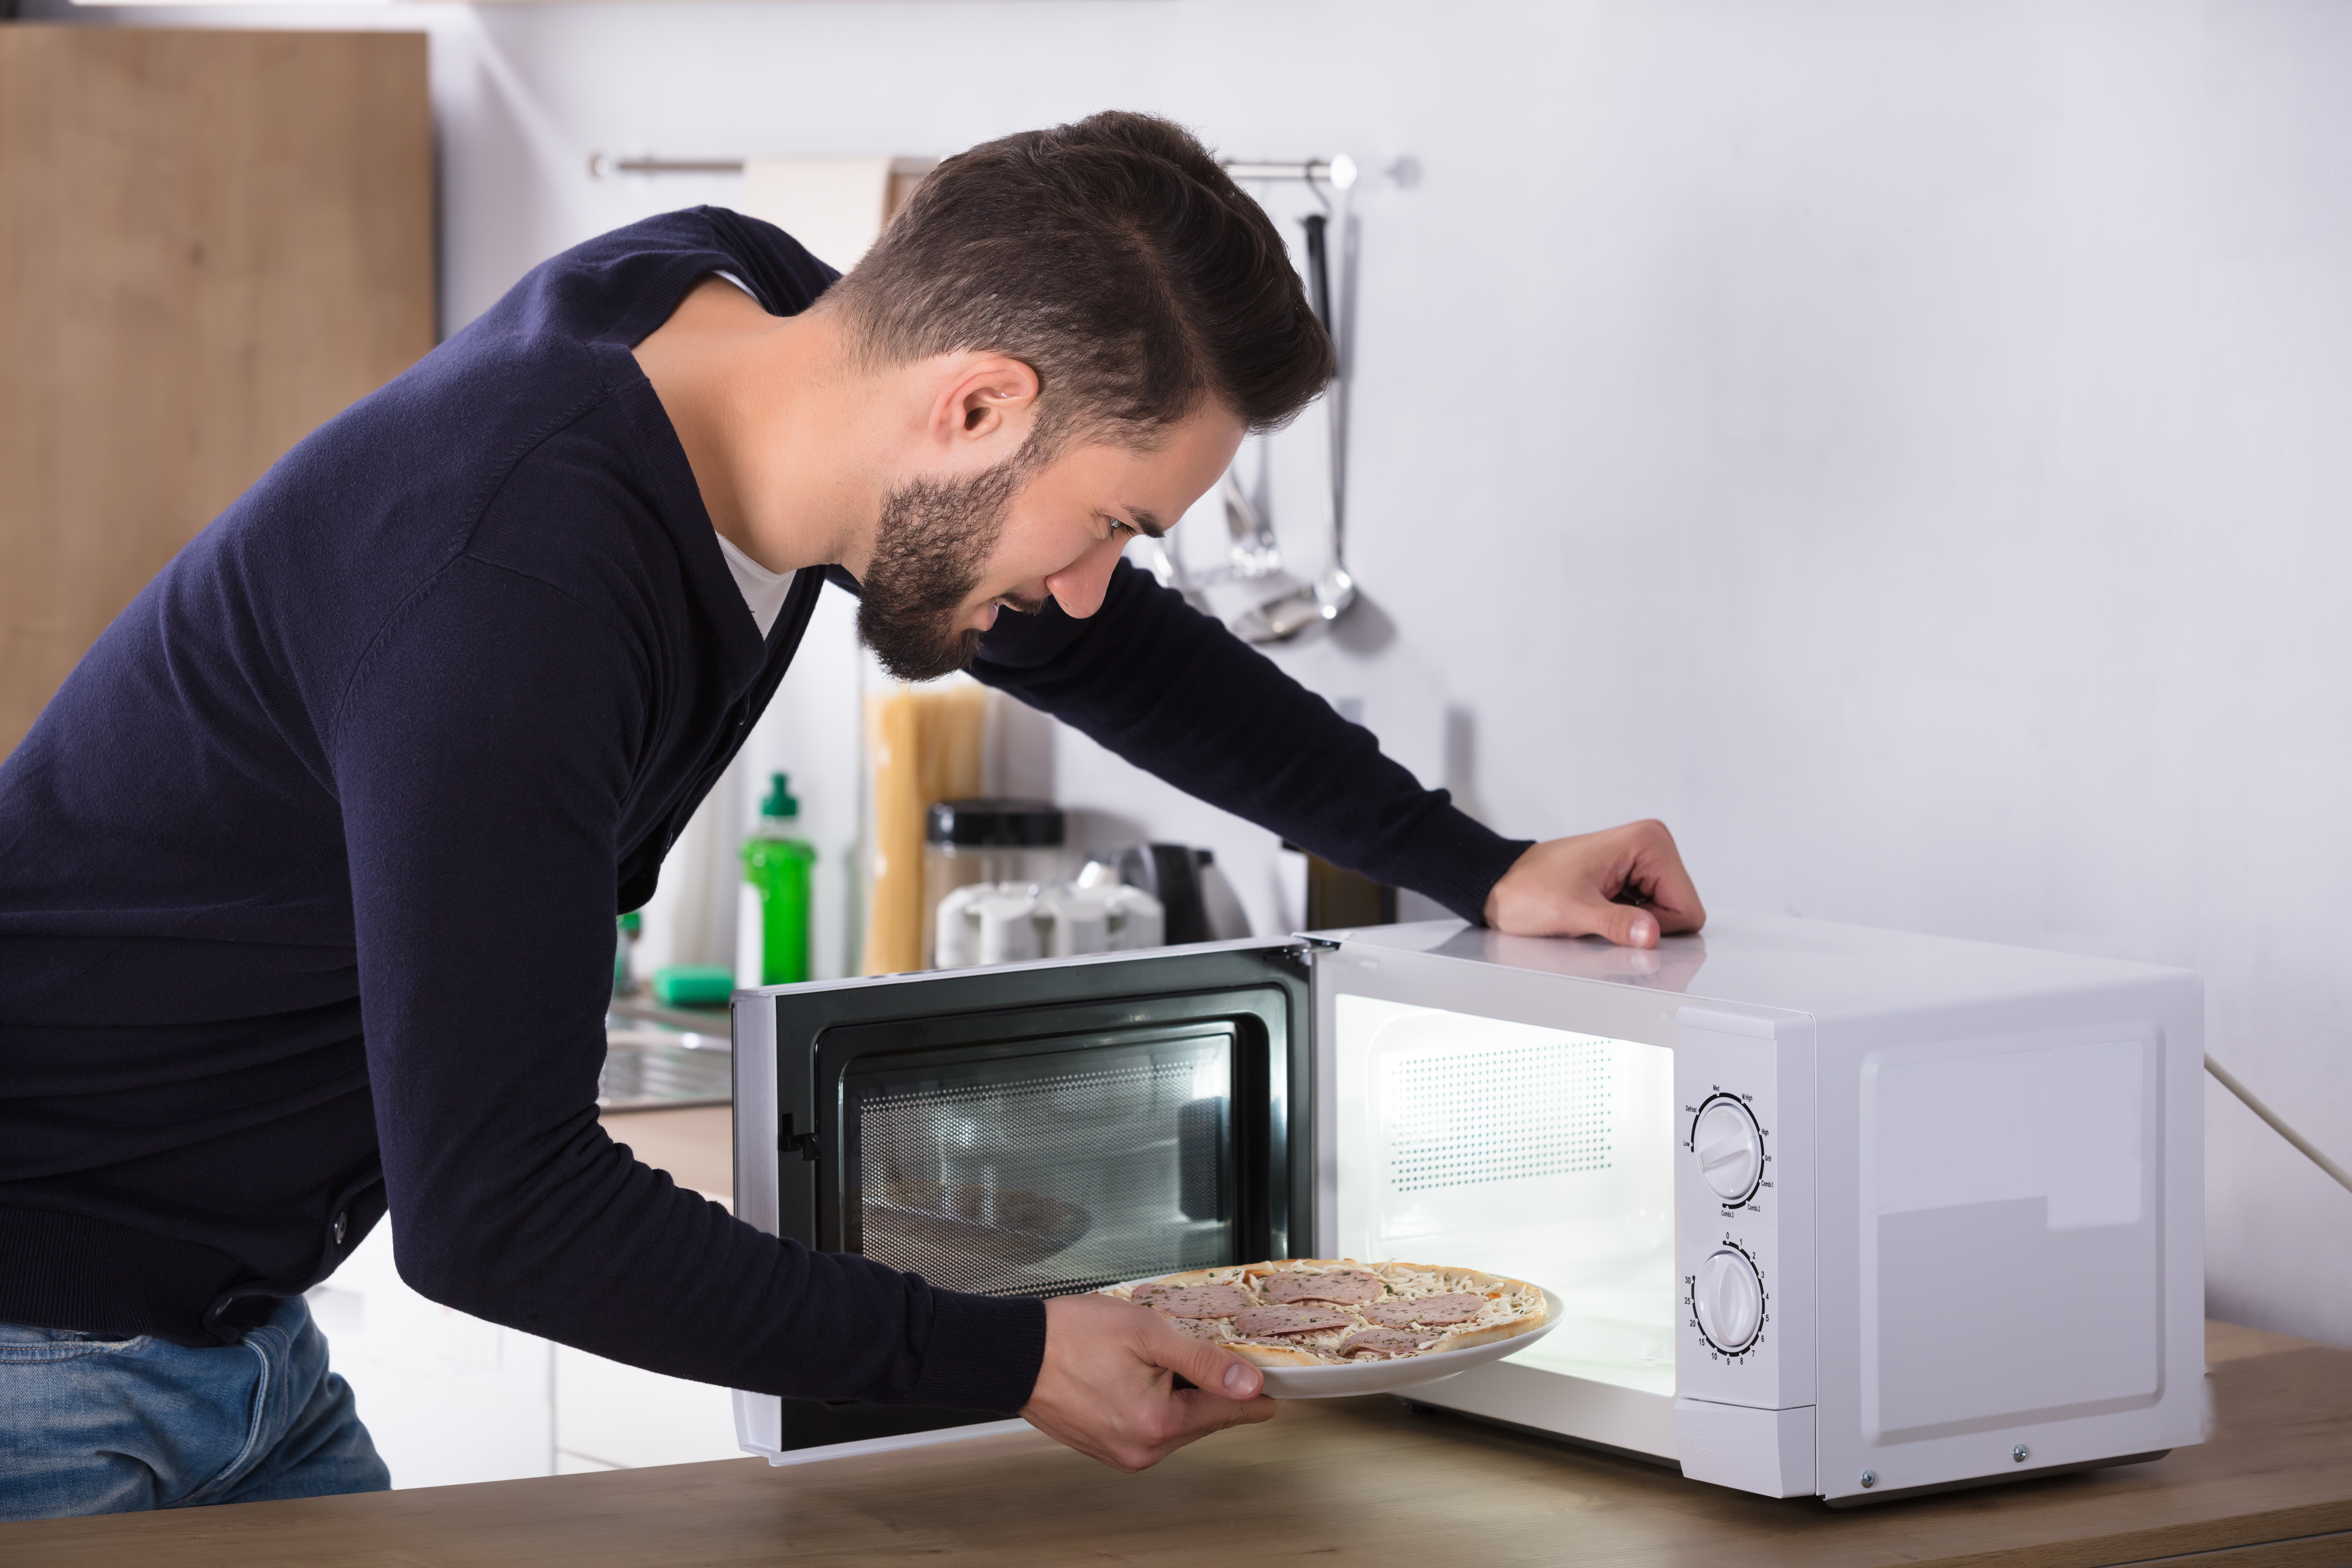 Man putting food into microwave